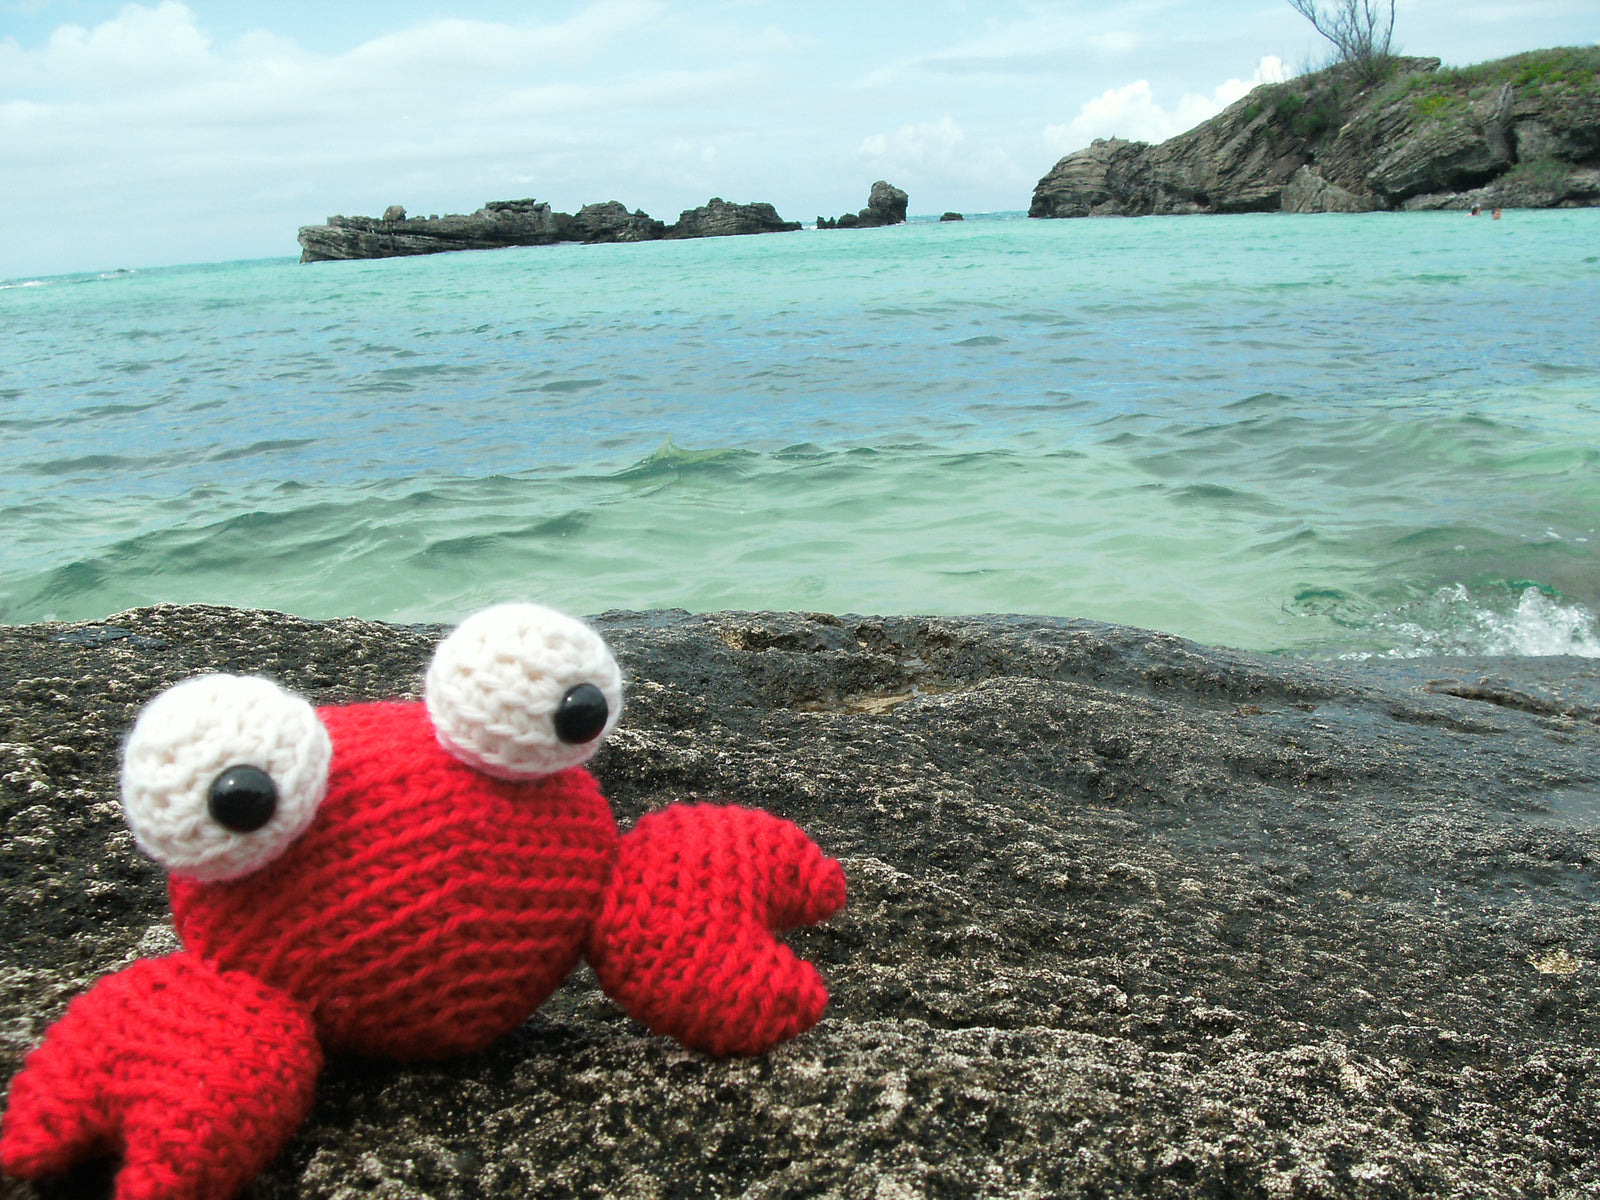 Tipper the Tiny Crab Crochet Amigurumi Pattern